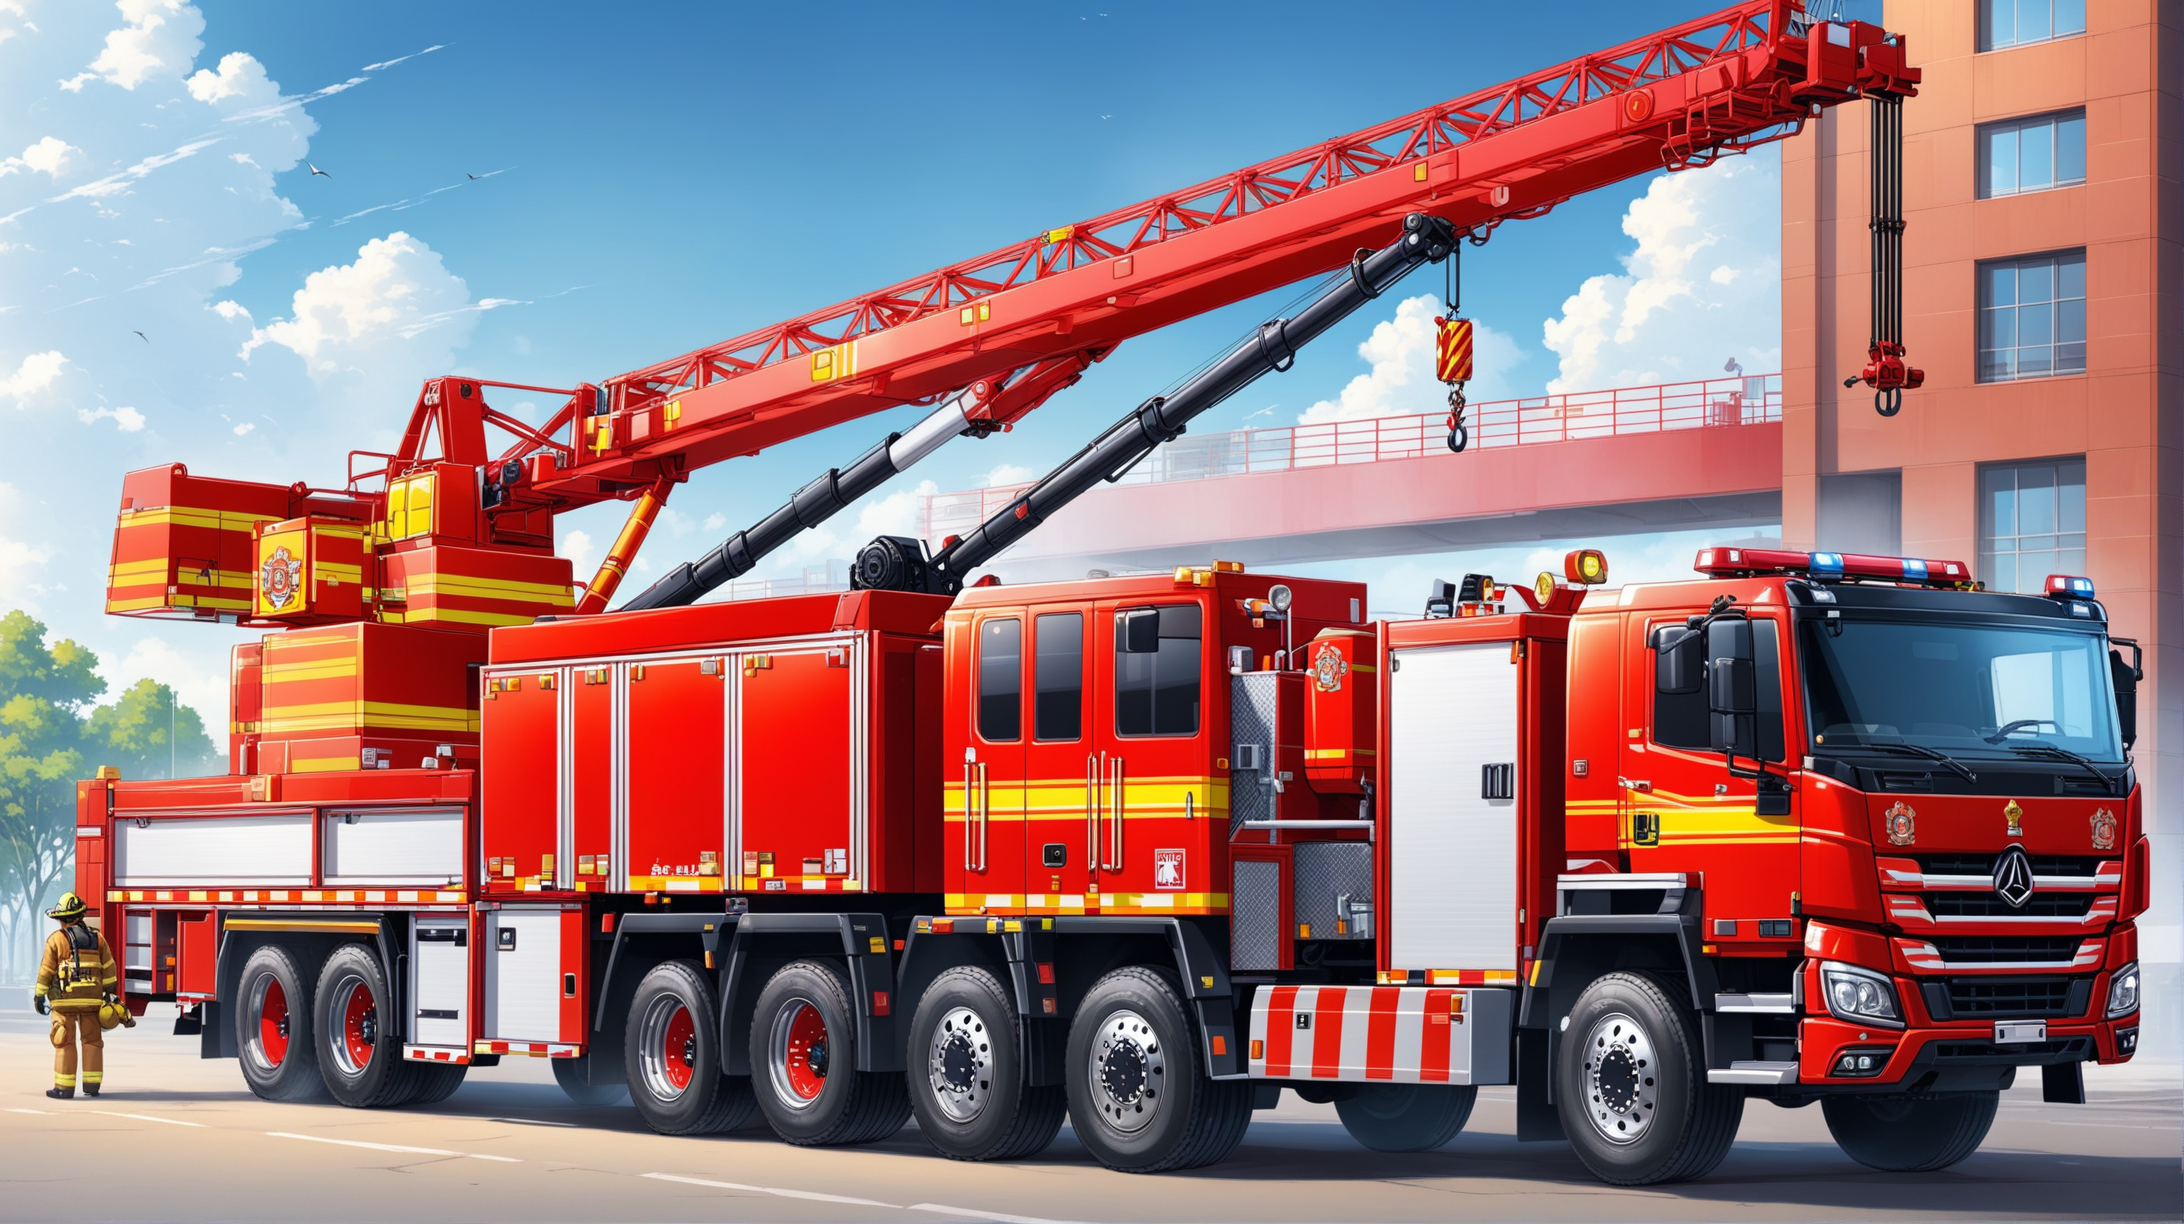 Hybrid Firefighter and Crane Truck Responding to Emergency